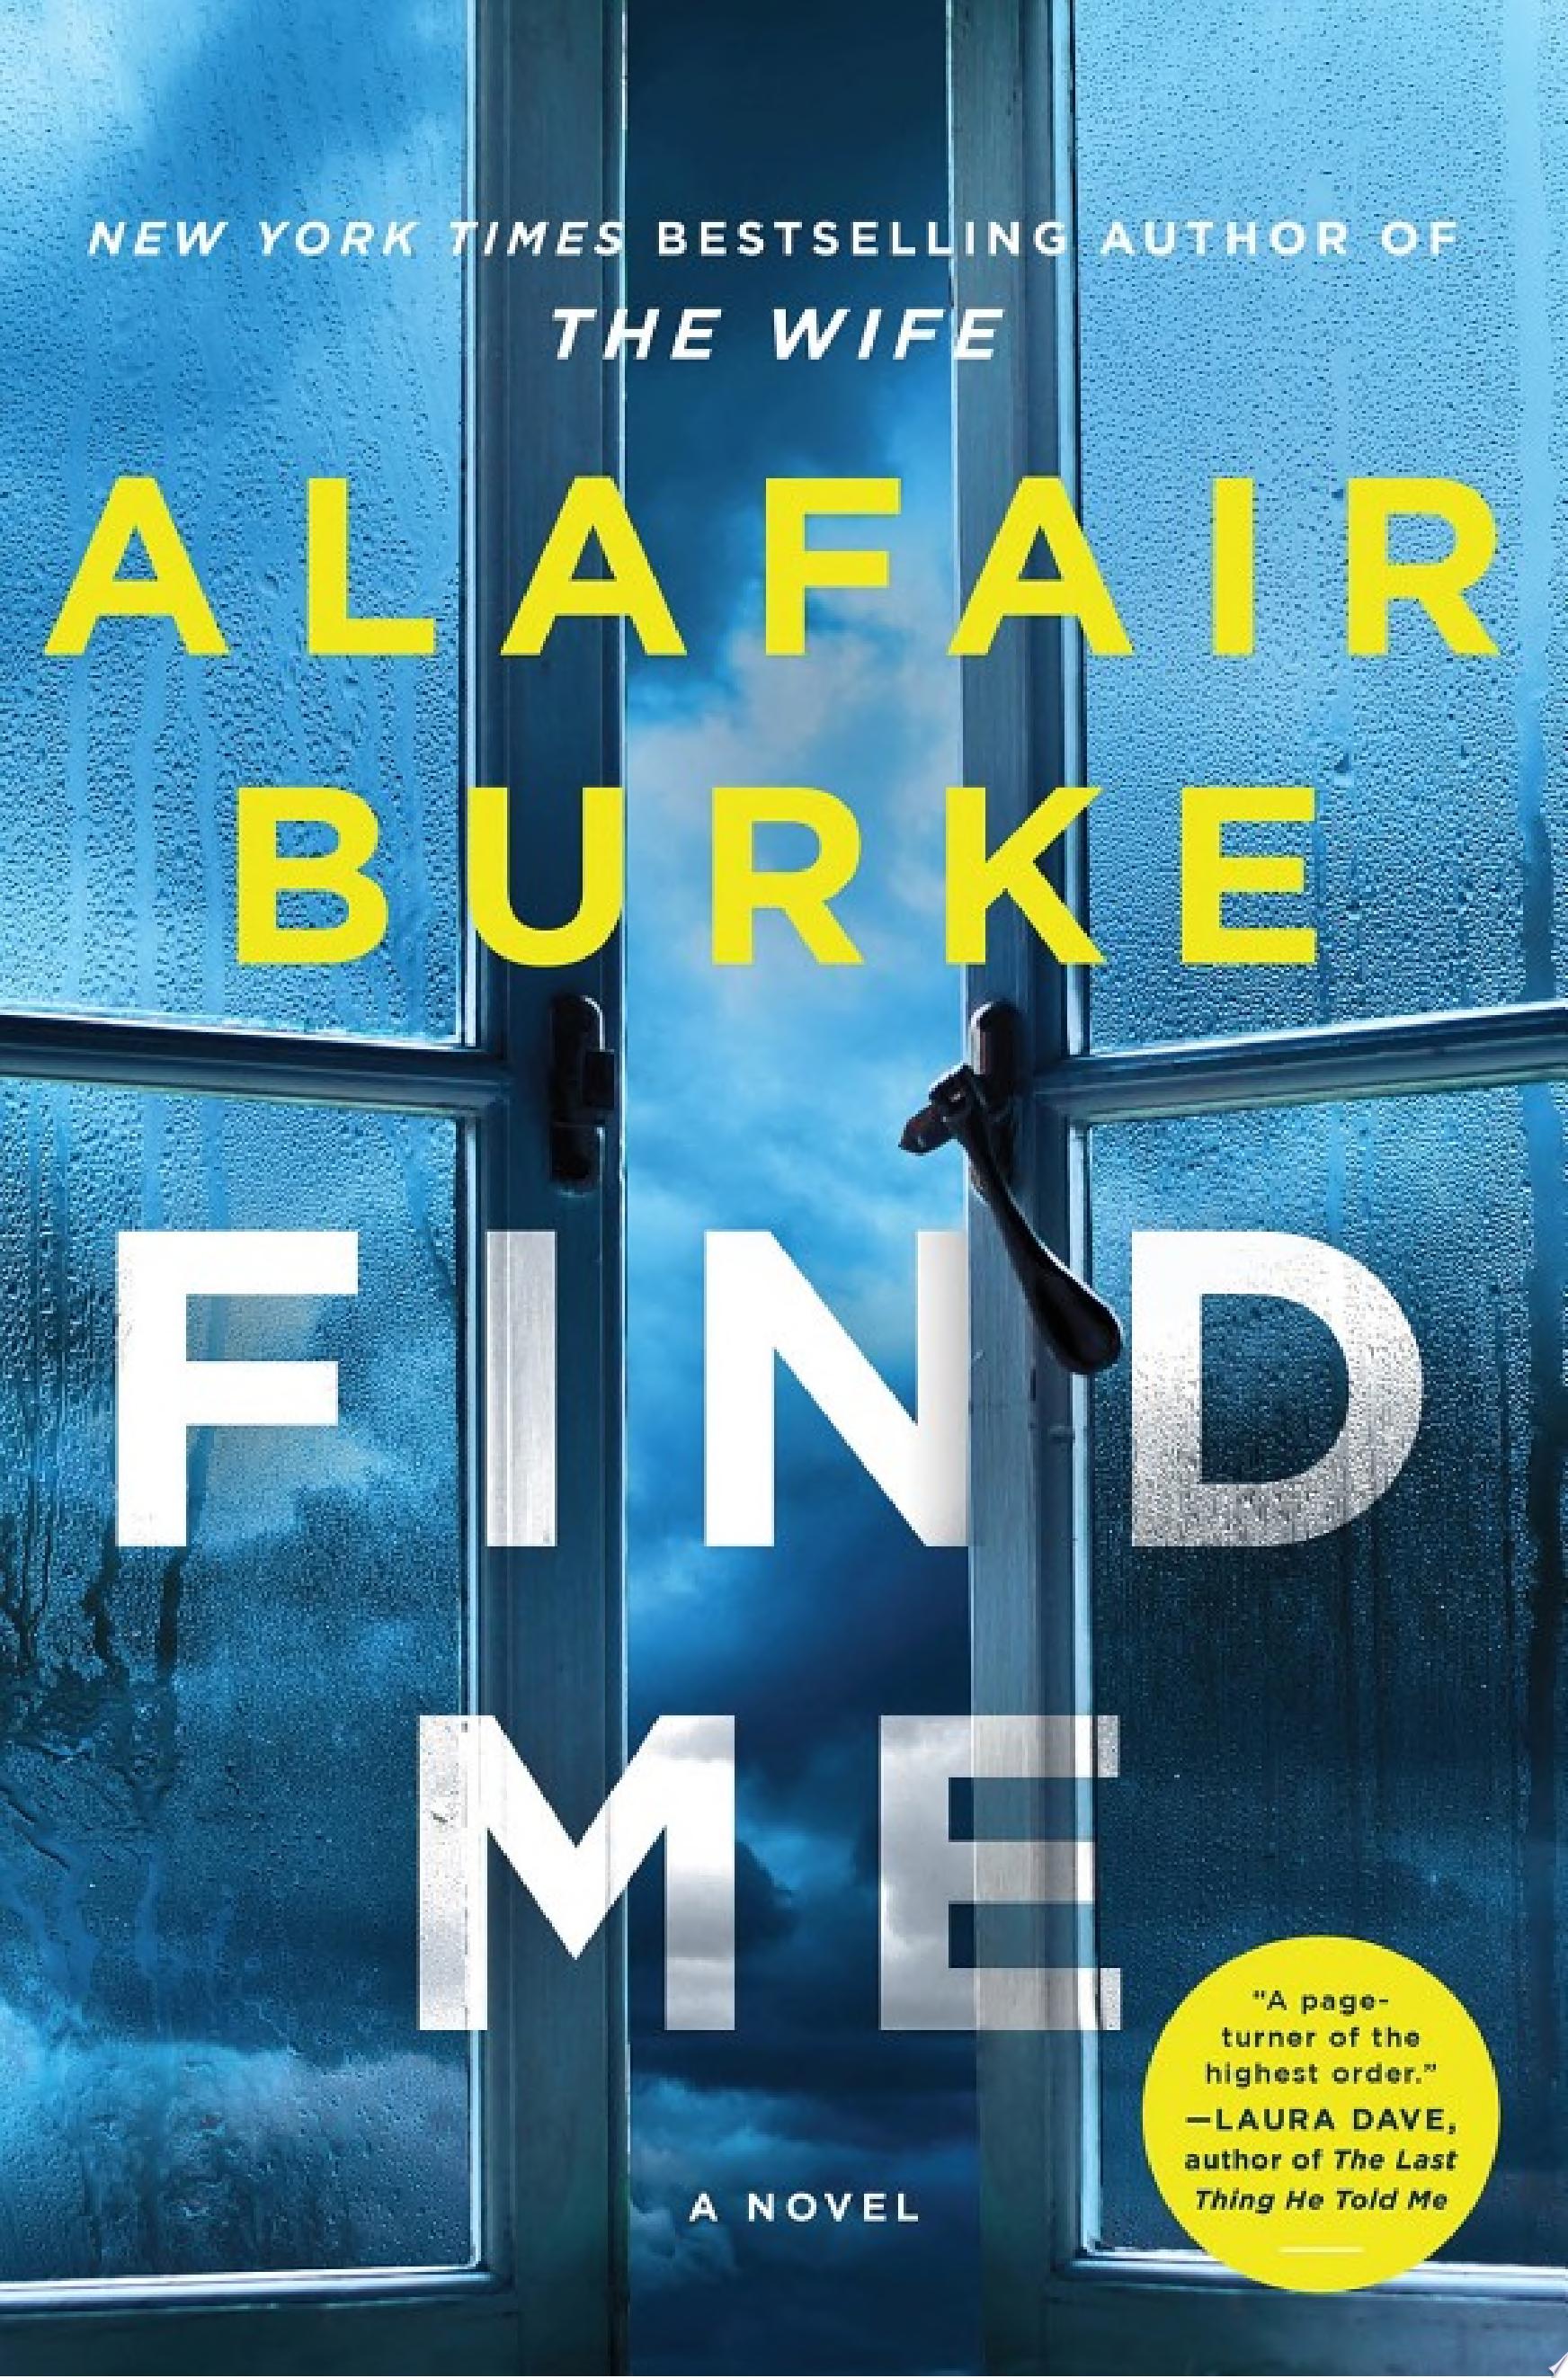 Image for "Find Me"